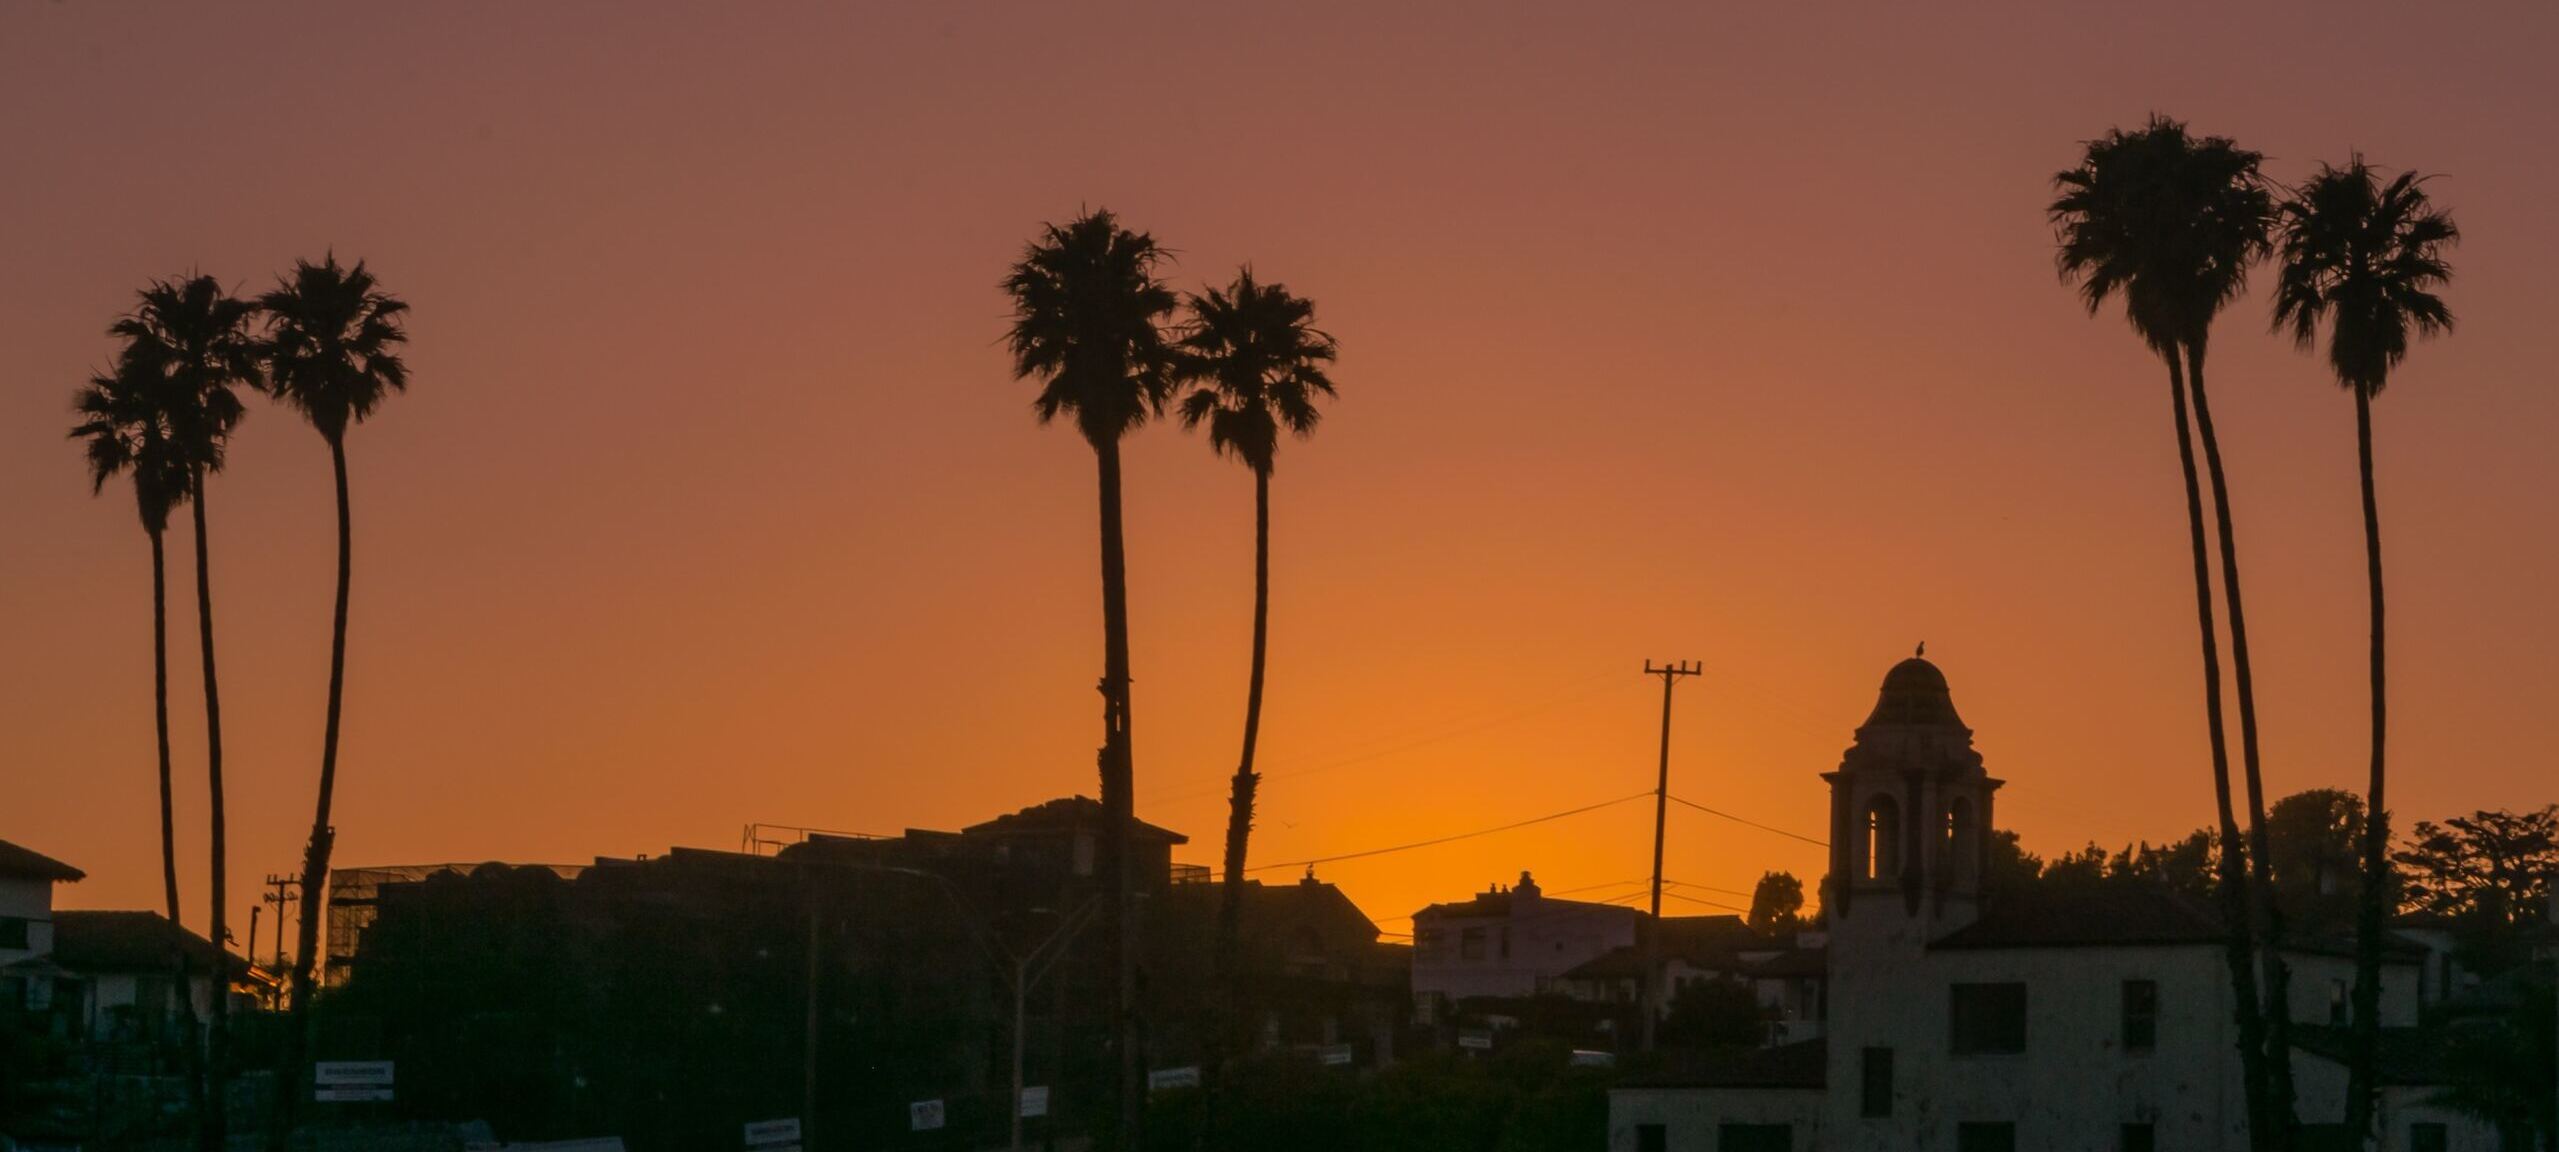 Orange sunset over silhouettes of downtown Santa Cruz, CA. Photo by Abhishek Rao on Unsplash 